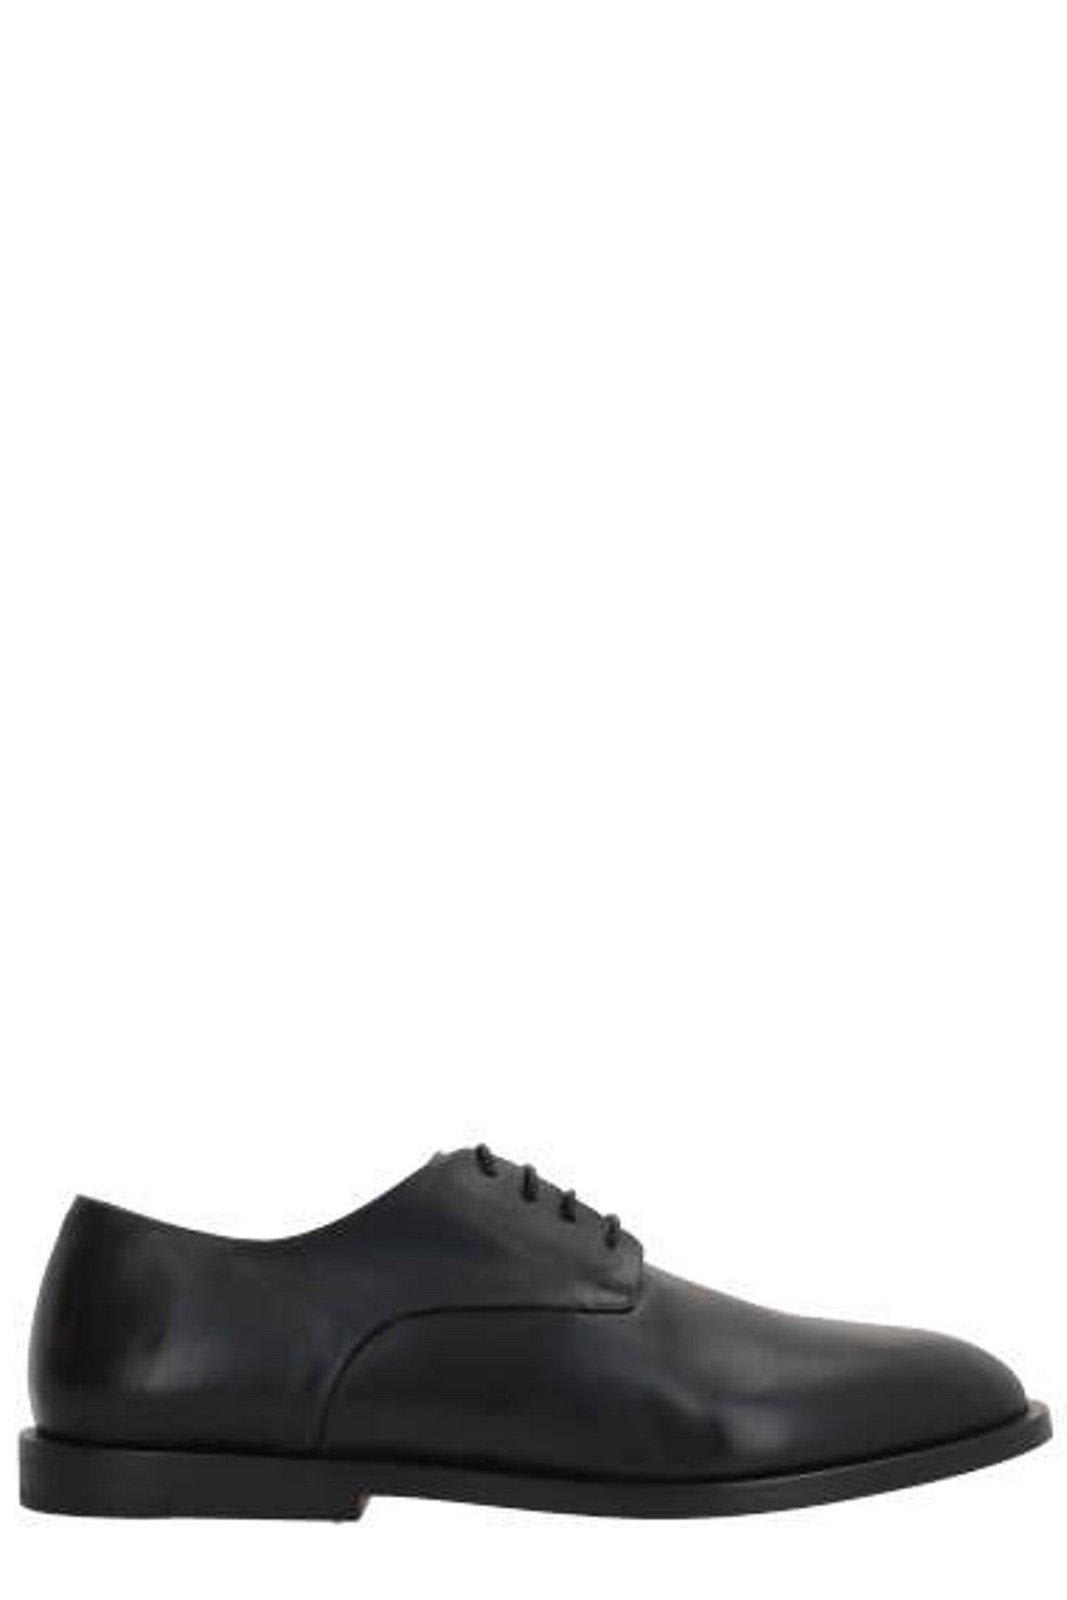 Shop Marsèll Almond Toe Mentone Derby Shoes In Black